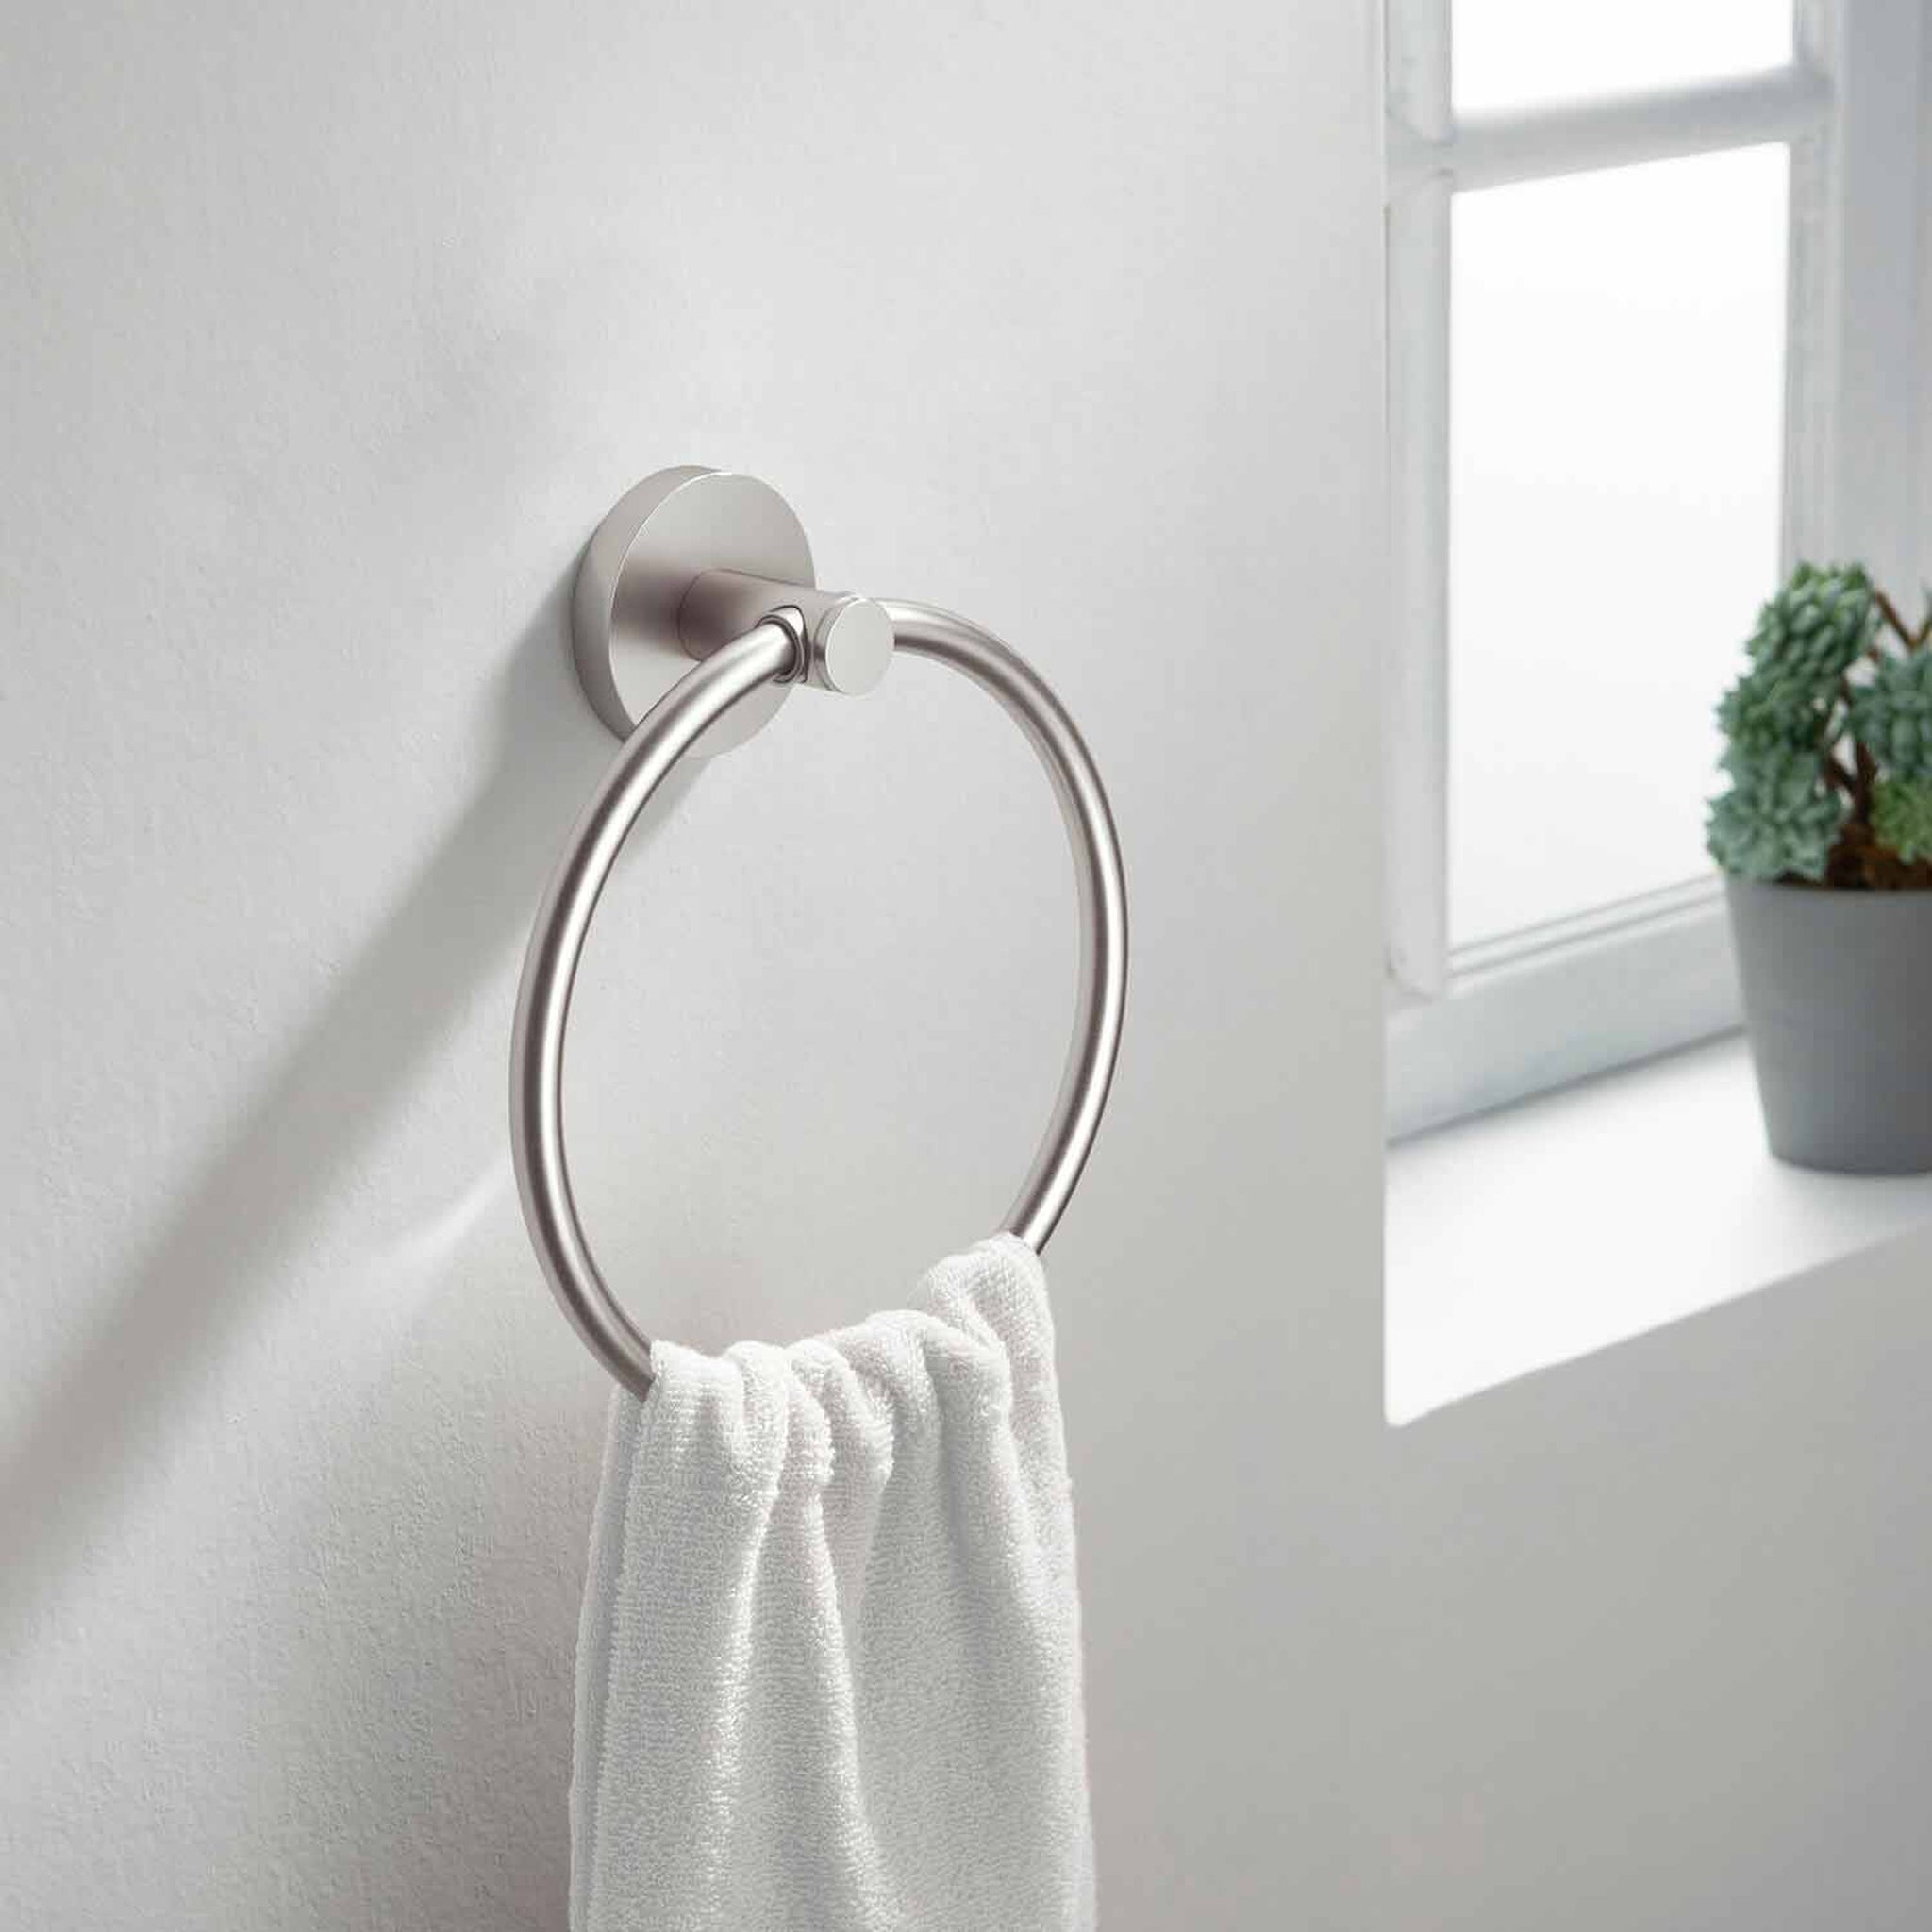 KIBI, KIBI Circular Brass Bathroom Towel Ring in Brushed Nickel Finish